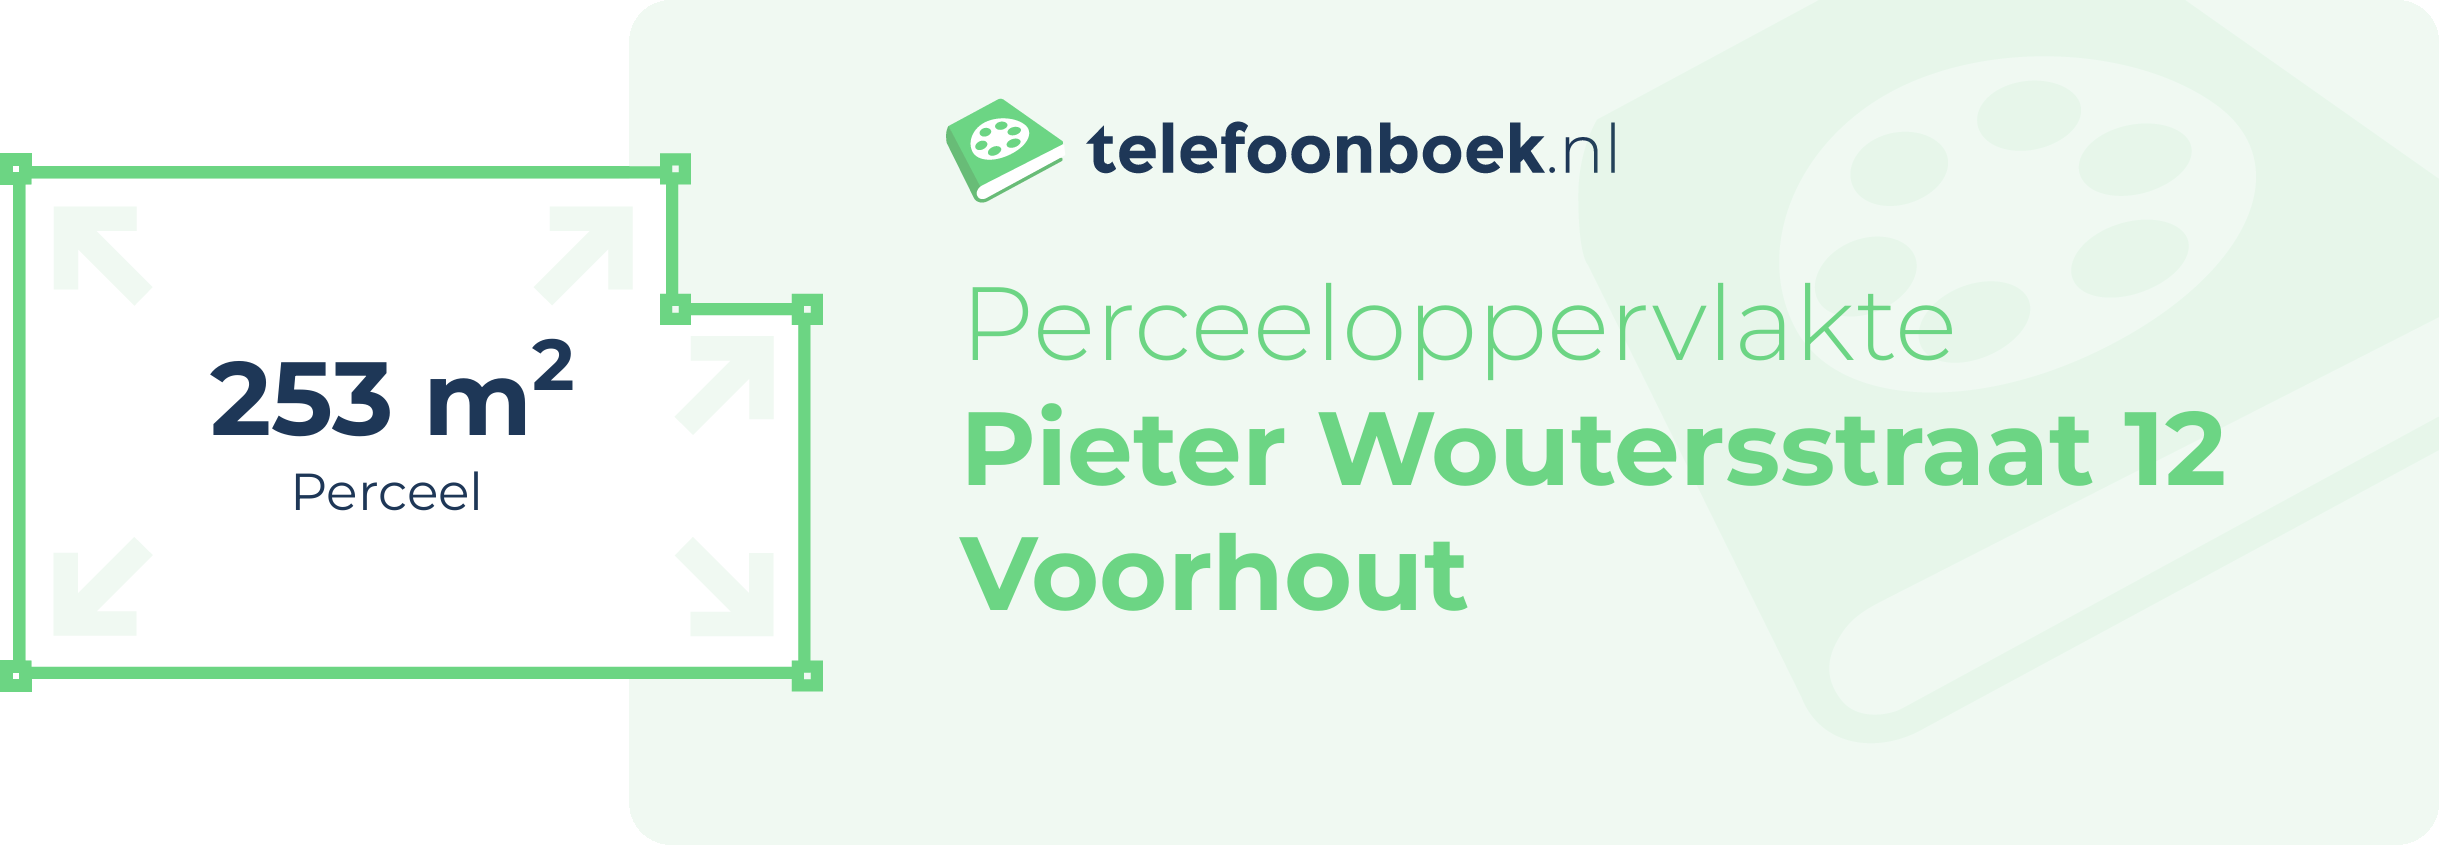 Perceeloppervlakte Pieter Woutersstraat 12 Voorhout